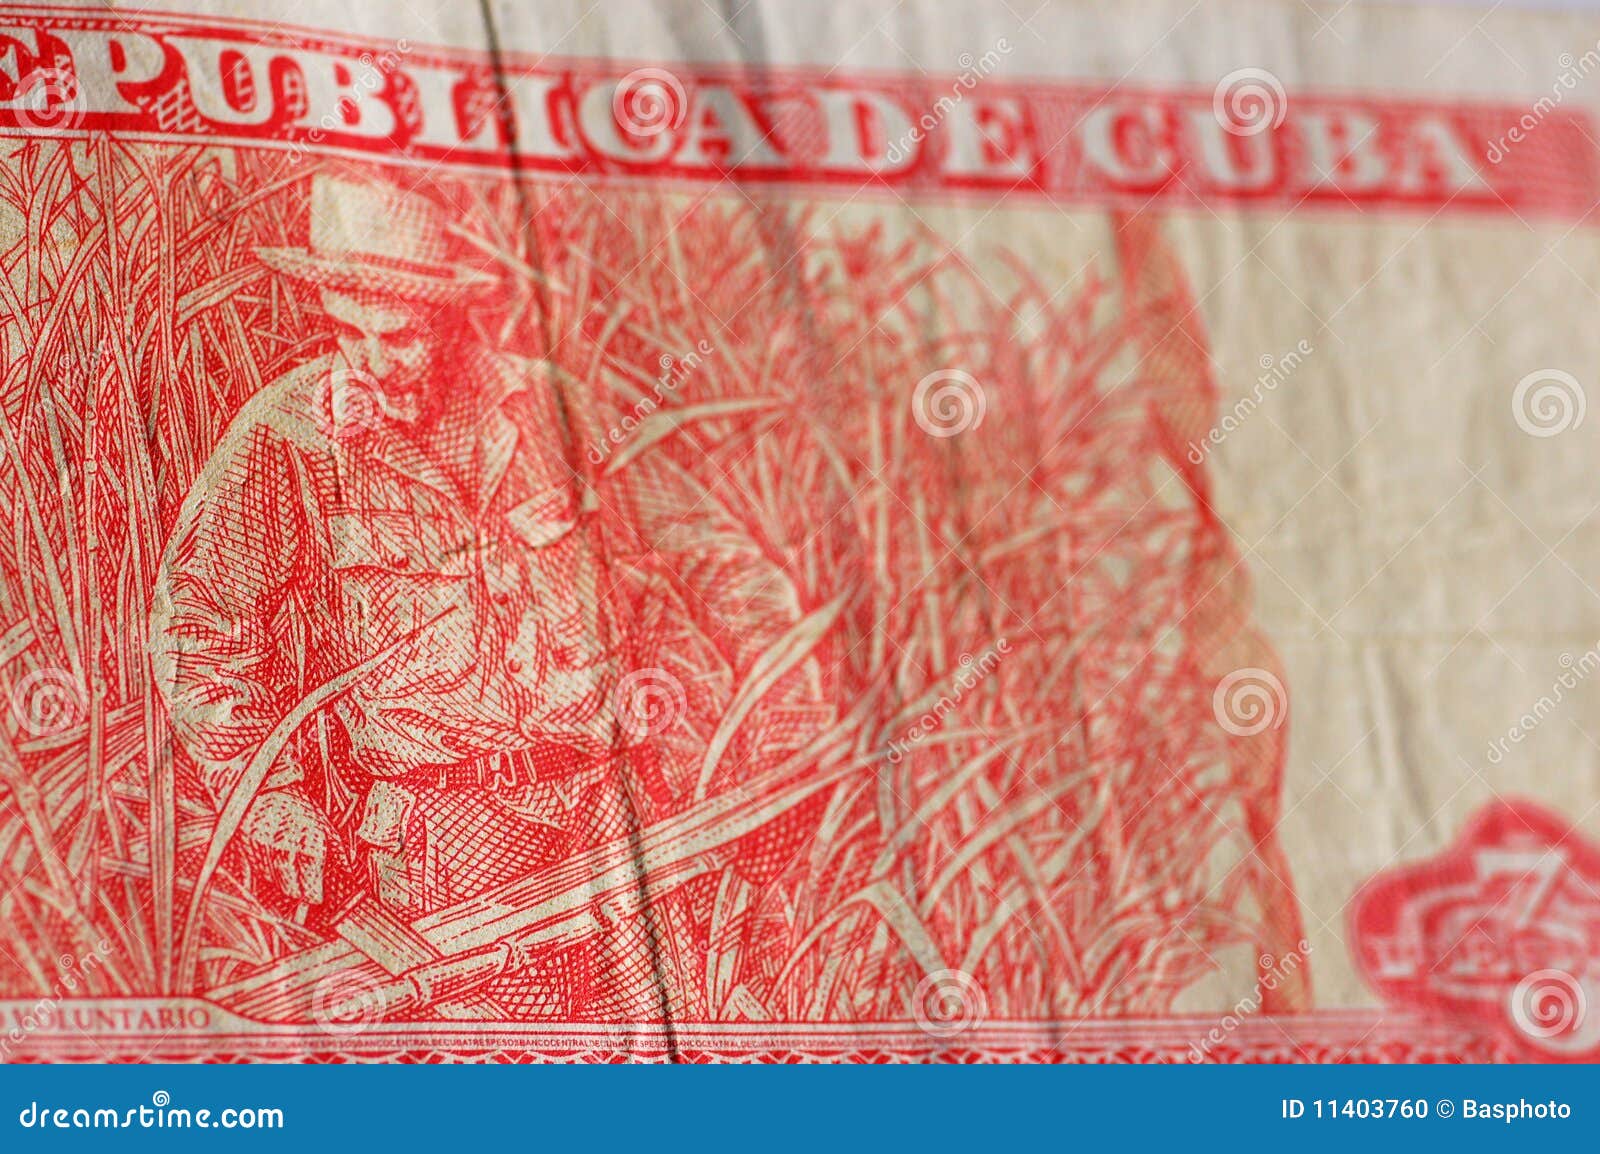 che guevara cuban banknote